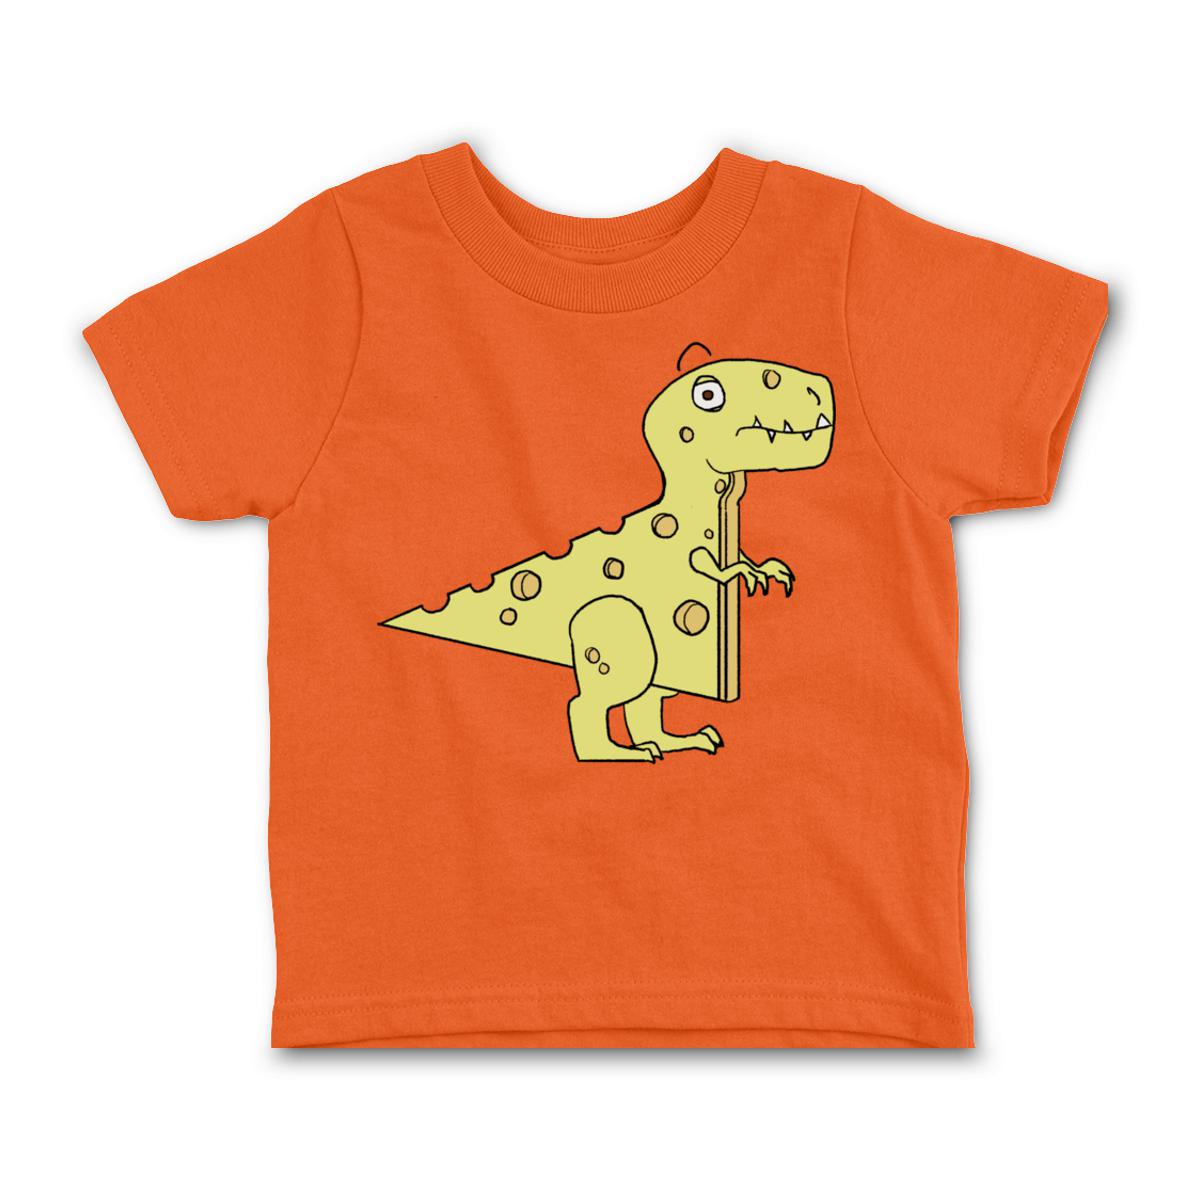 Cheeseosaurus Rex Toddler Tee 4T orange